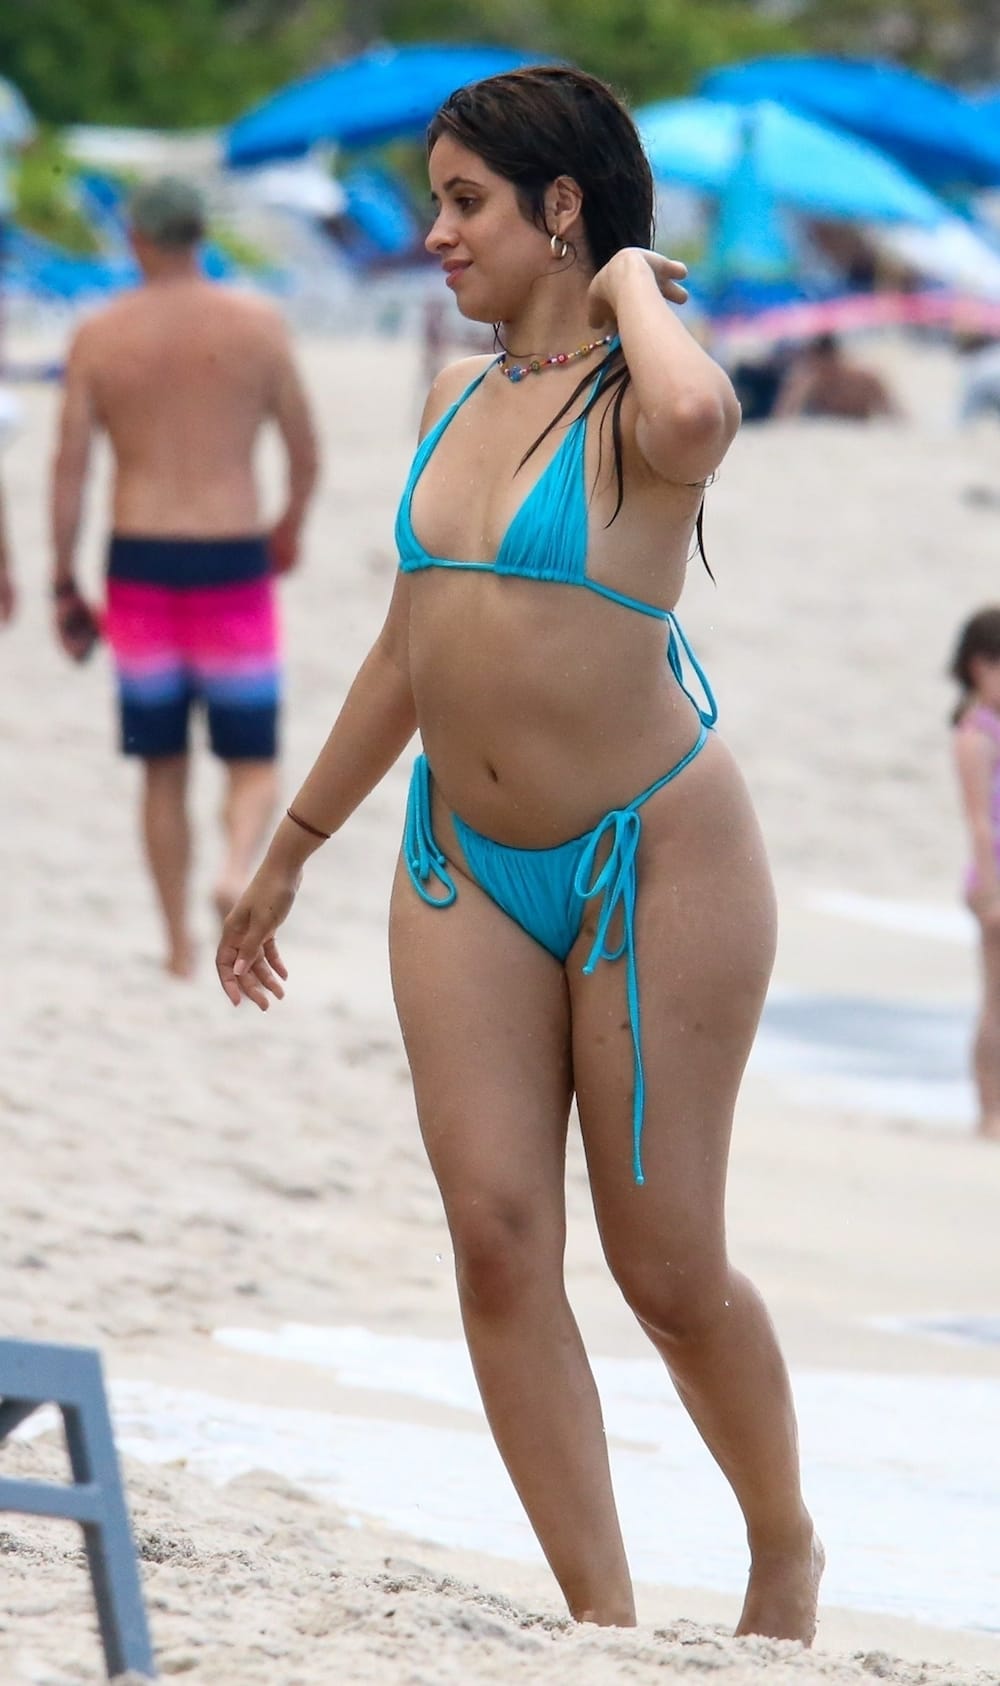 Camila Cabello looked incredible in a tiny string bikini as she had a fun b...